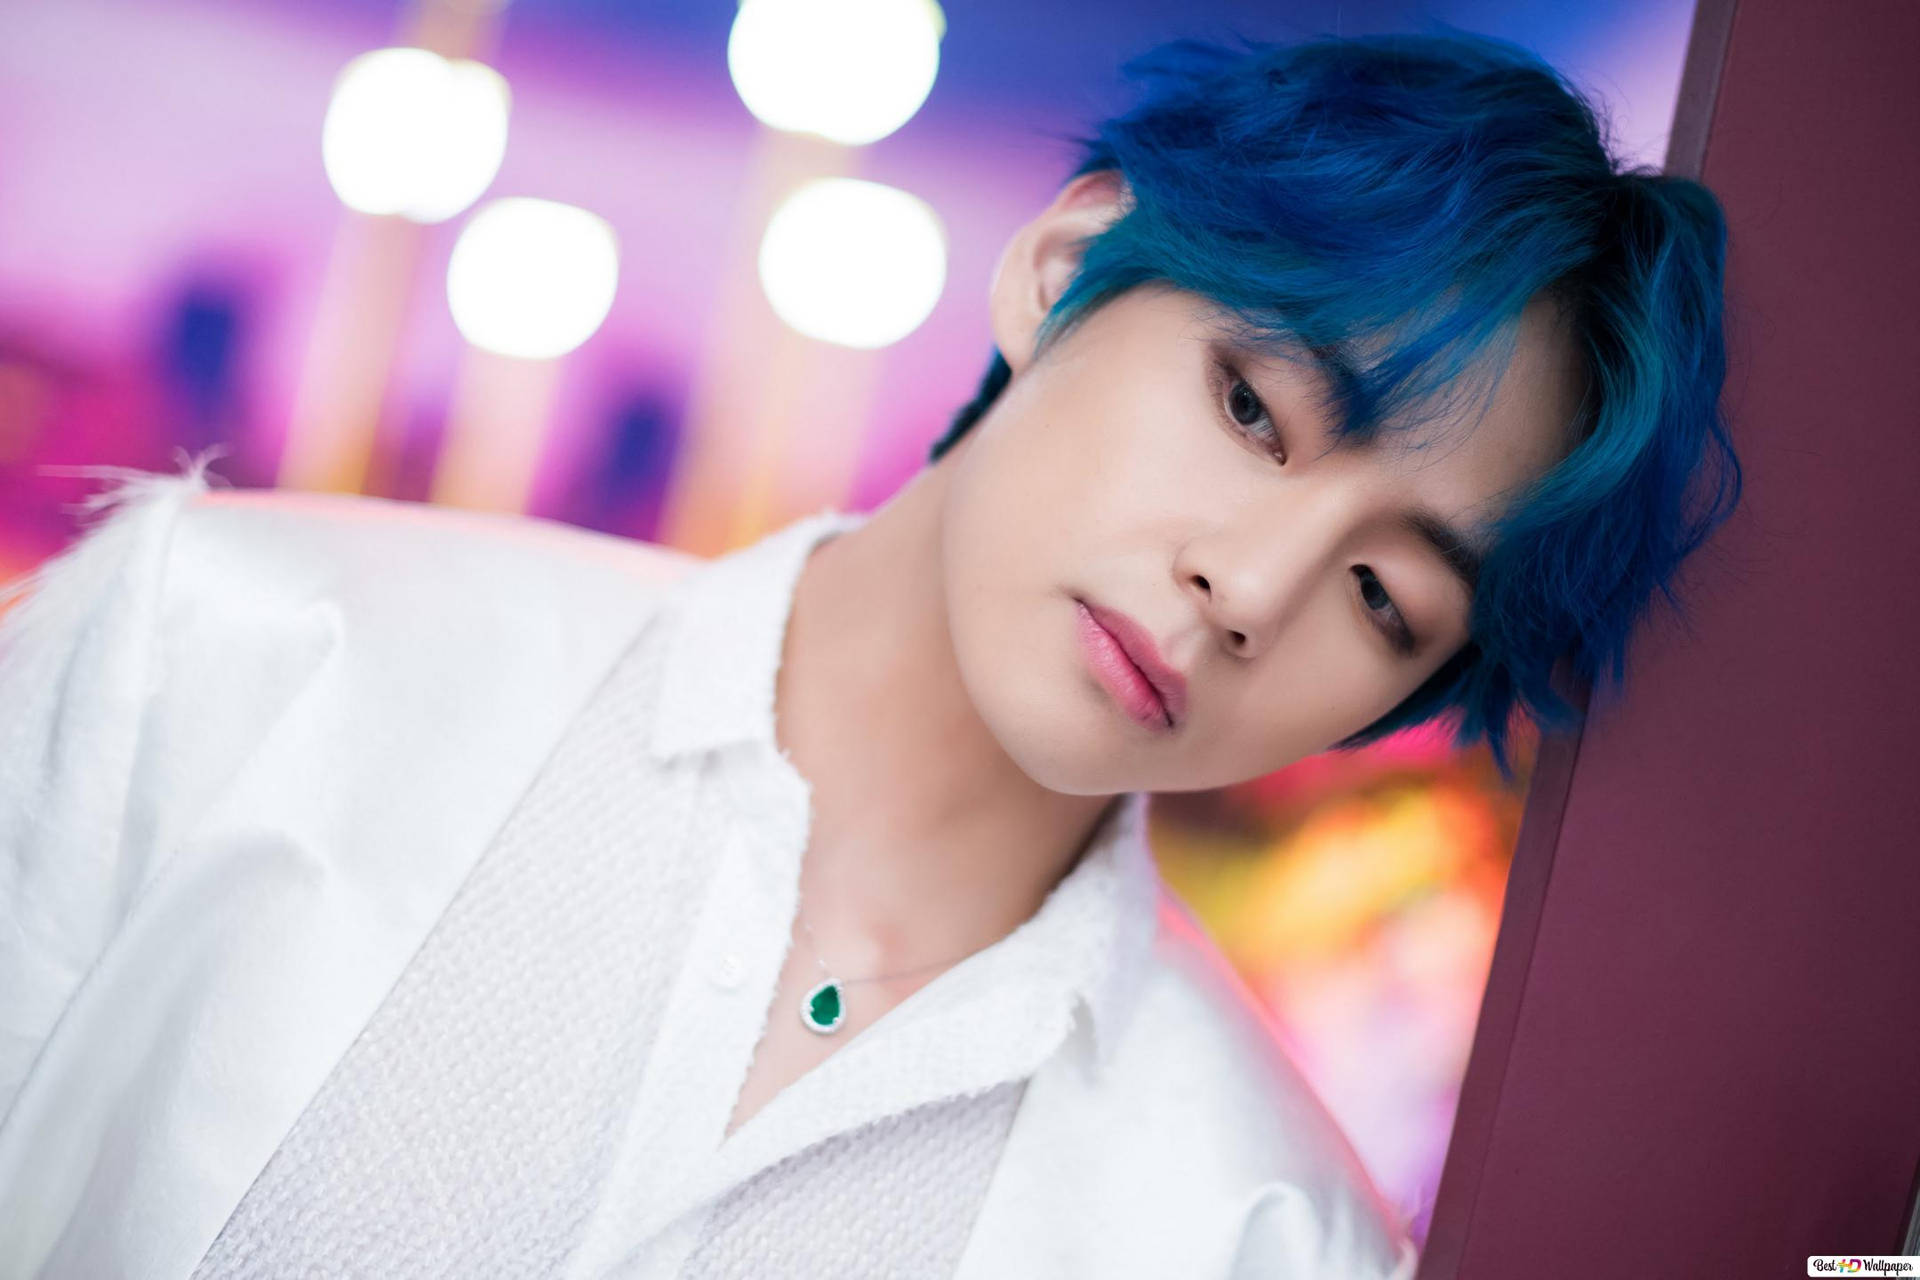 Kim Taehyung (BTS V) with Blue Hair Wallpaper - K-POP STOCK #bts #btsv # taehyung #blue #wallpaper | Kim taehyung, Blue hair, Taehyung